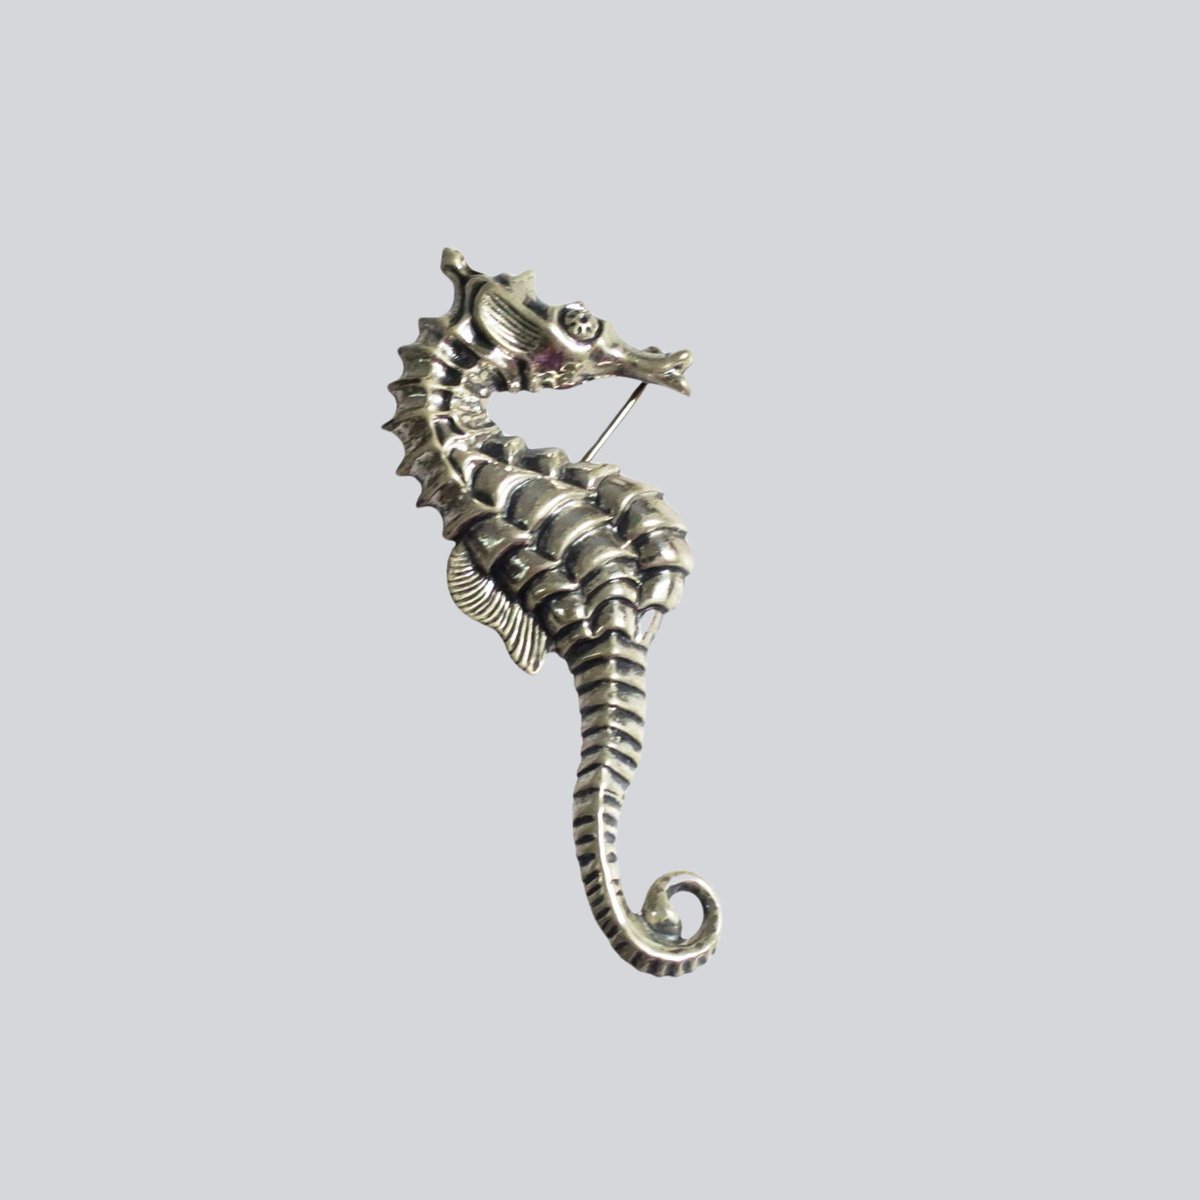 Vintage Sterling Silver Seahorse by Beau Craft .925, Vintage Pin,  Hatpin Accessories tuppu.net/f75ab0f7 #SMILEtt23 #Dad2024 #Vintage4Sale #EtsyteamUnity